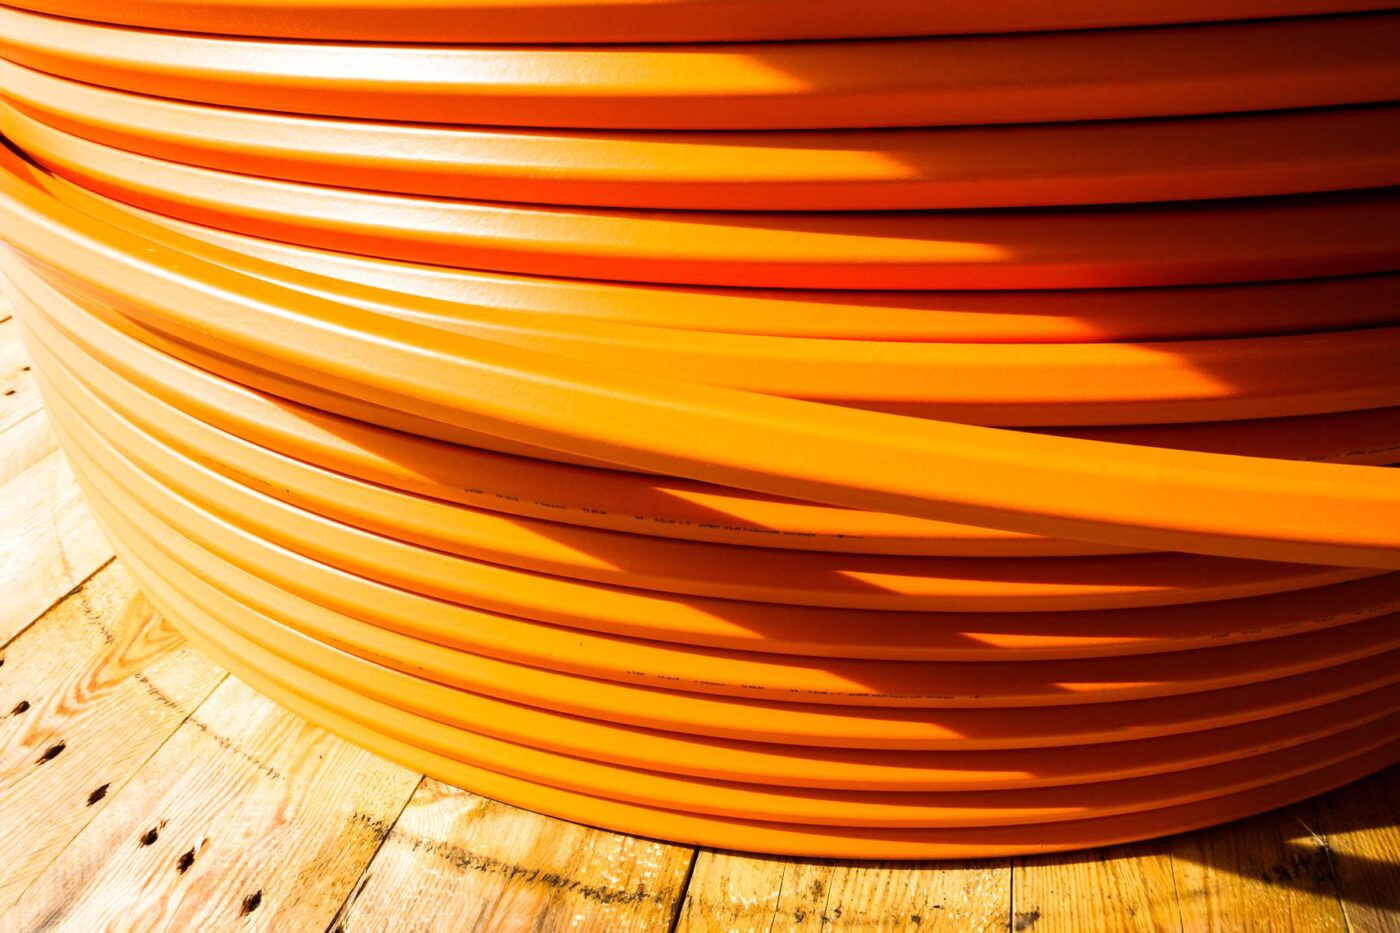 Orange Fiber optic cable on spool